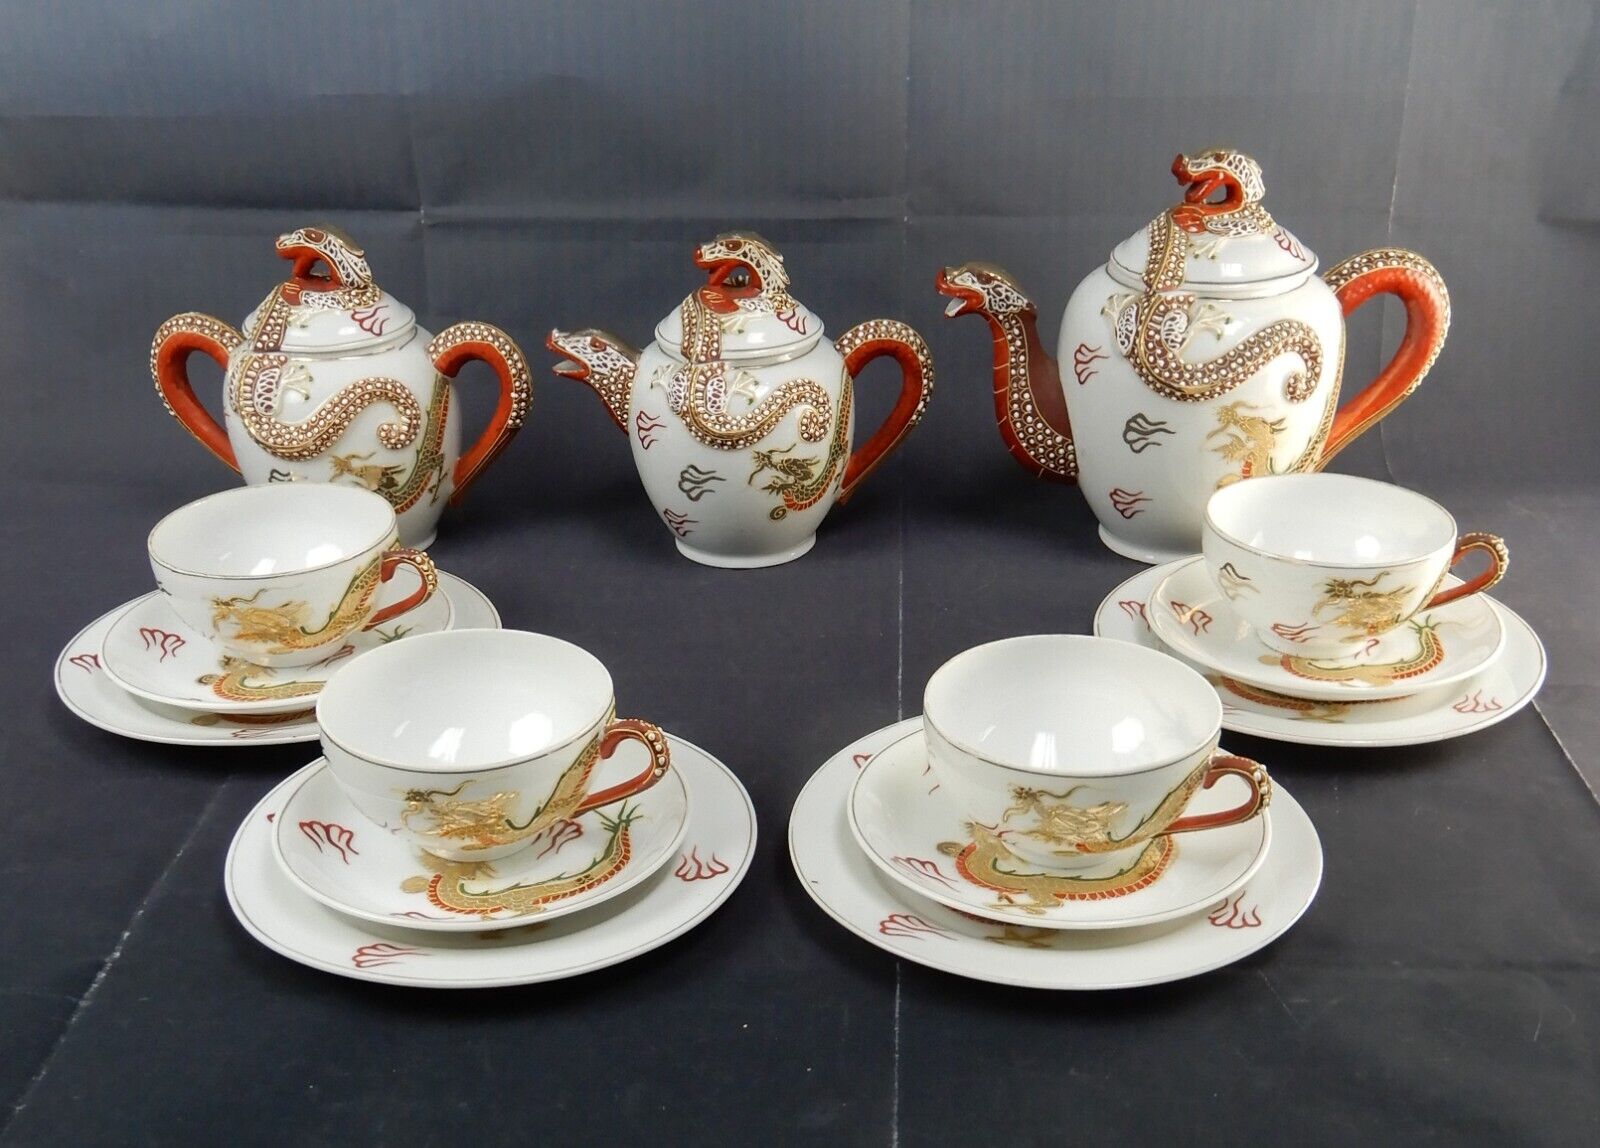 15 Pc. Antique Moriage Kutani Lithophane Dragonware Tea Set Service for 4